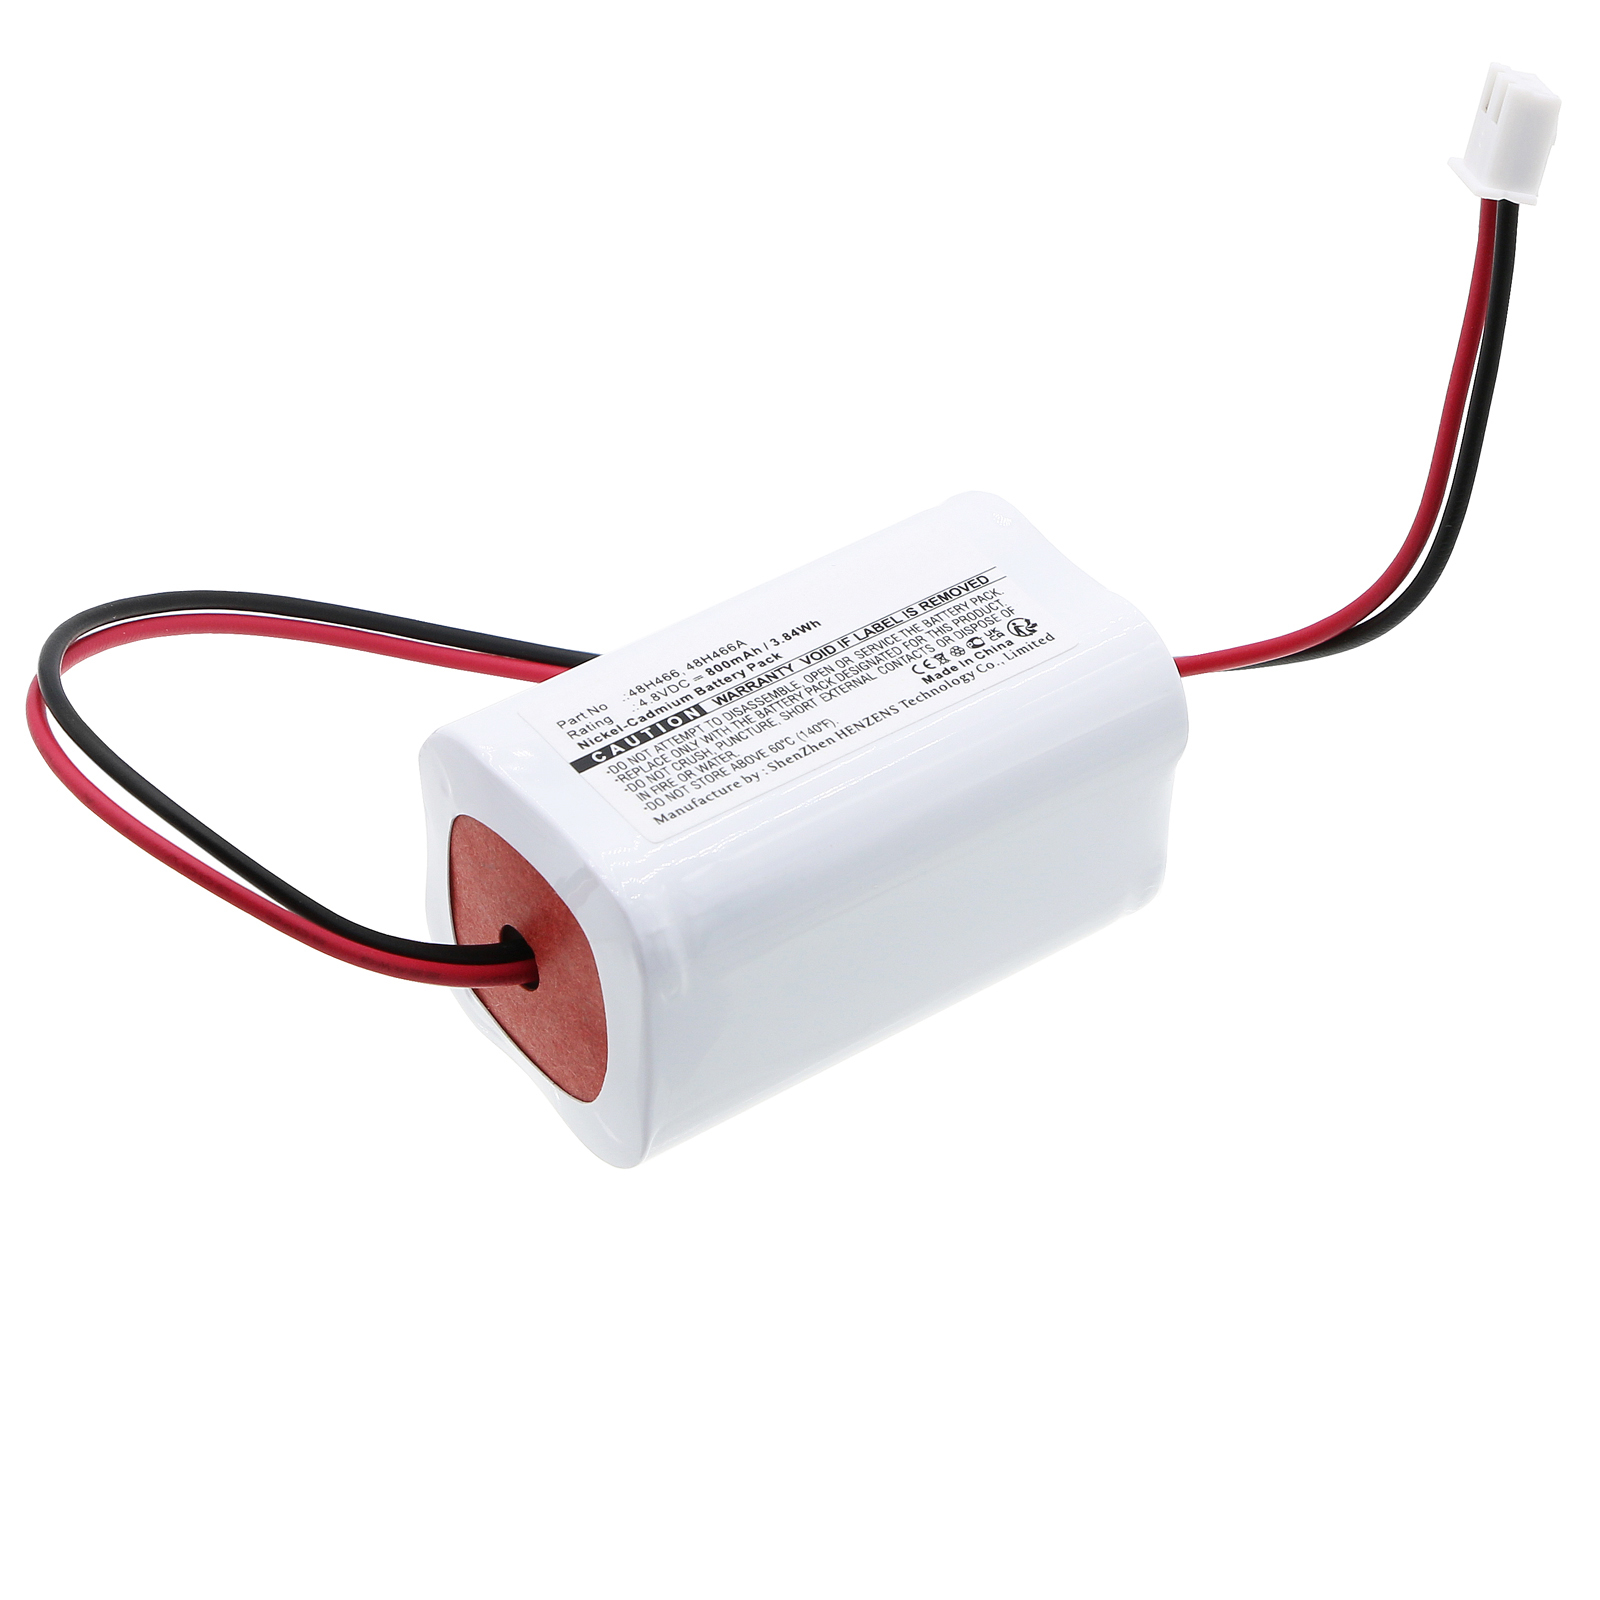 Synergy Digital Emergency Lighting Battery, Compatible with LumaPro 48H466 Emergency Lighting Battery (Ni-CD, 4.8V, 800mAh)